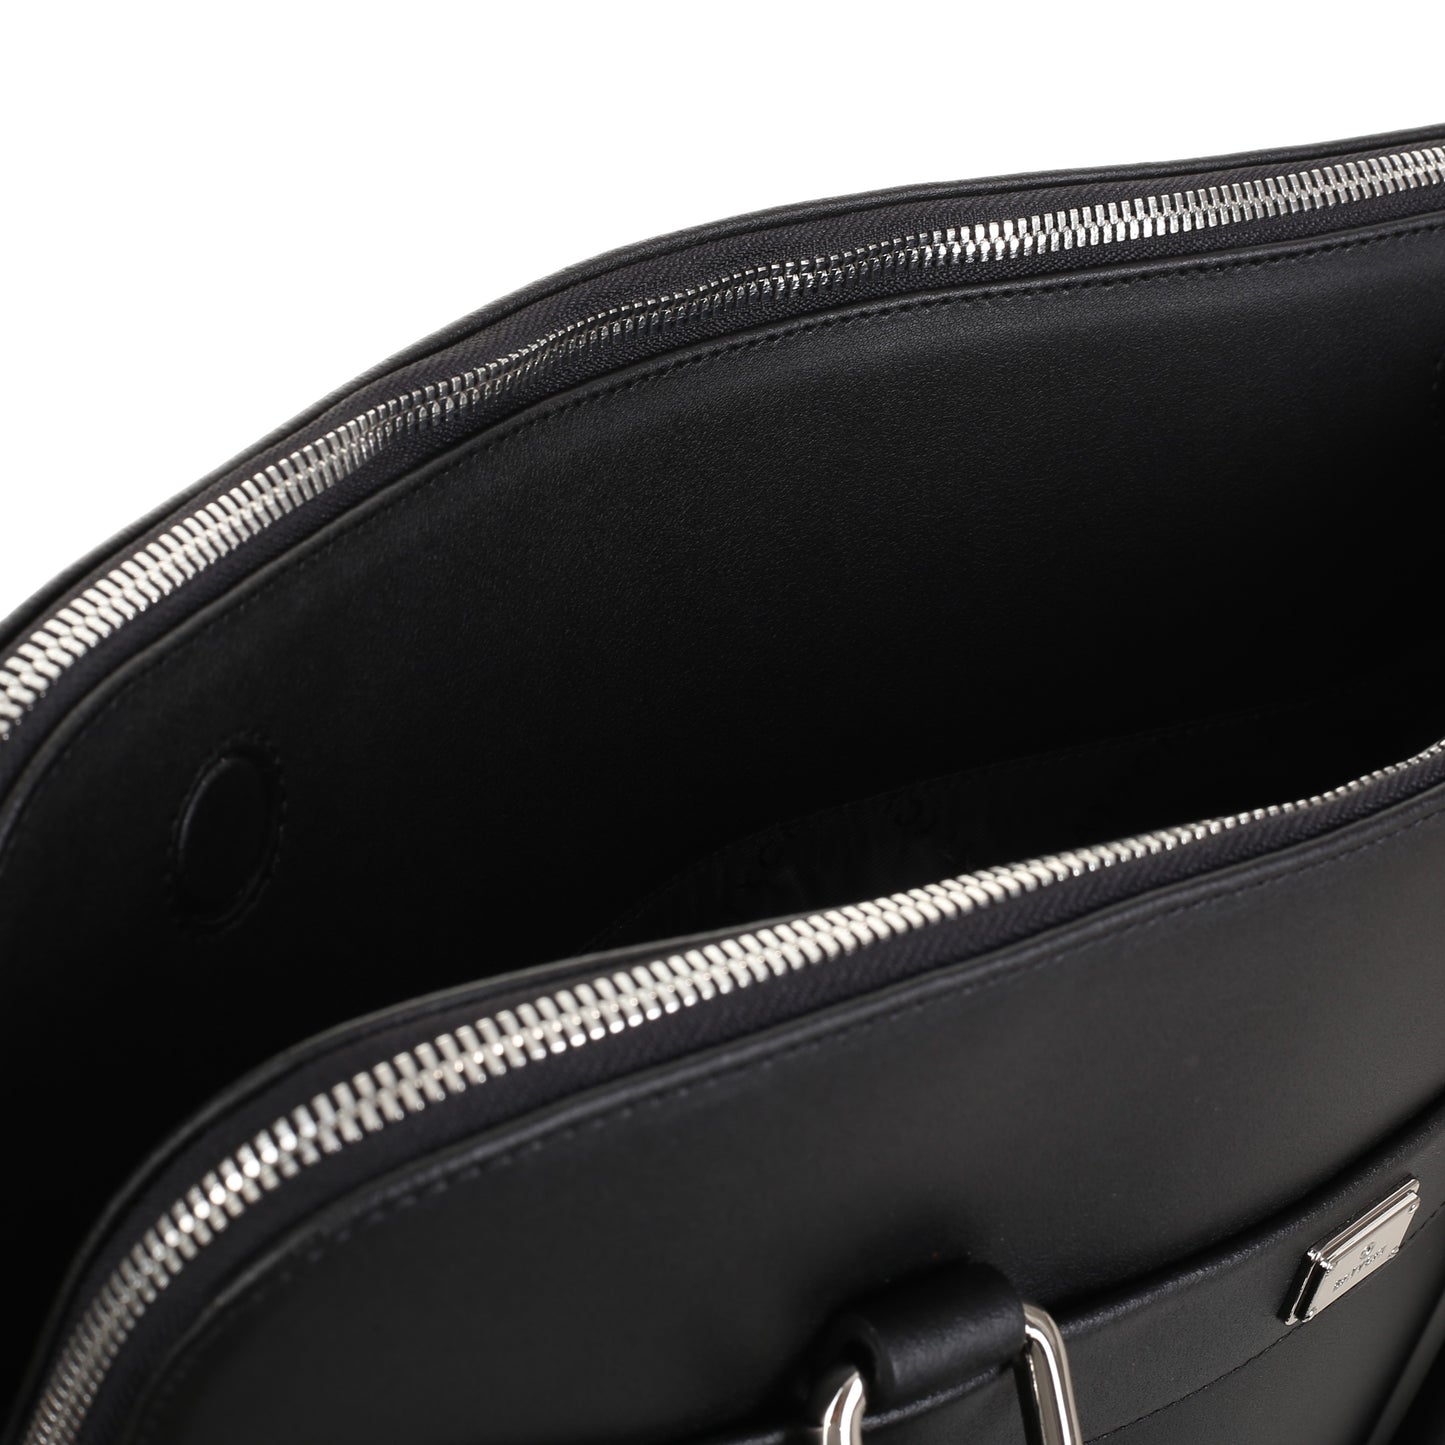 Napa black leather laptop bag